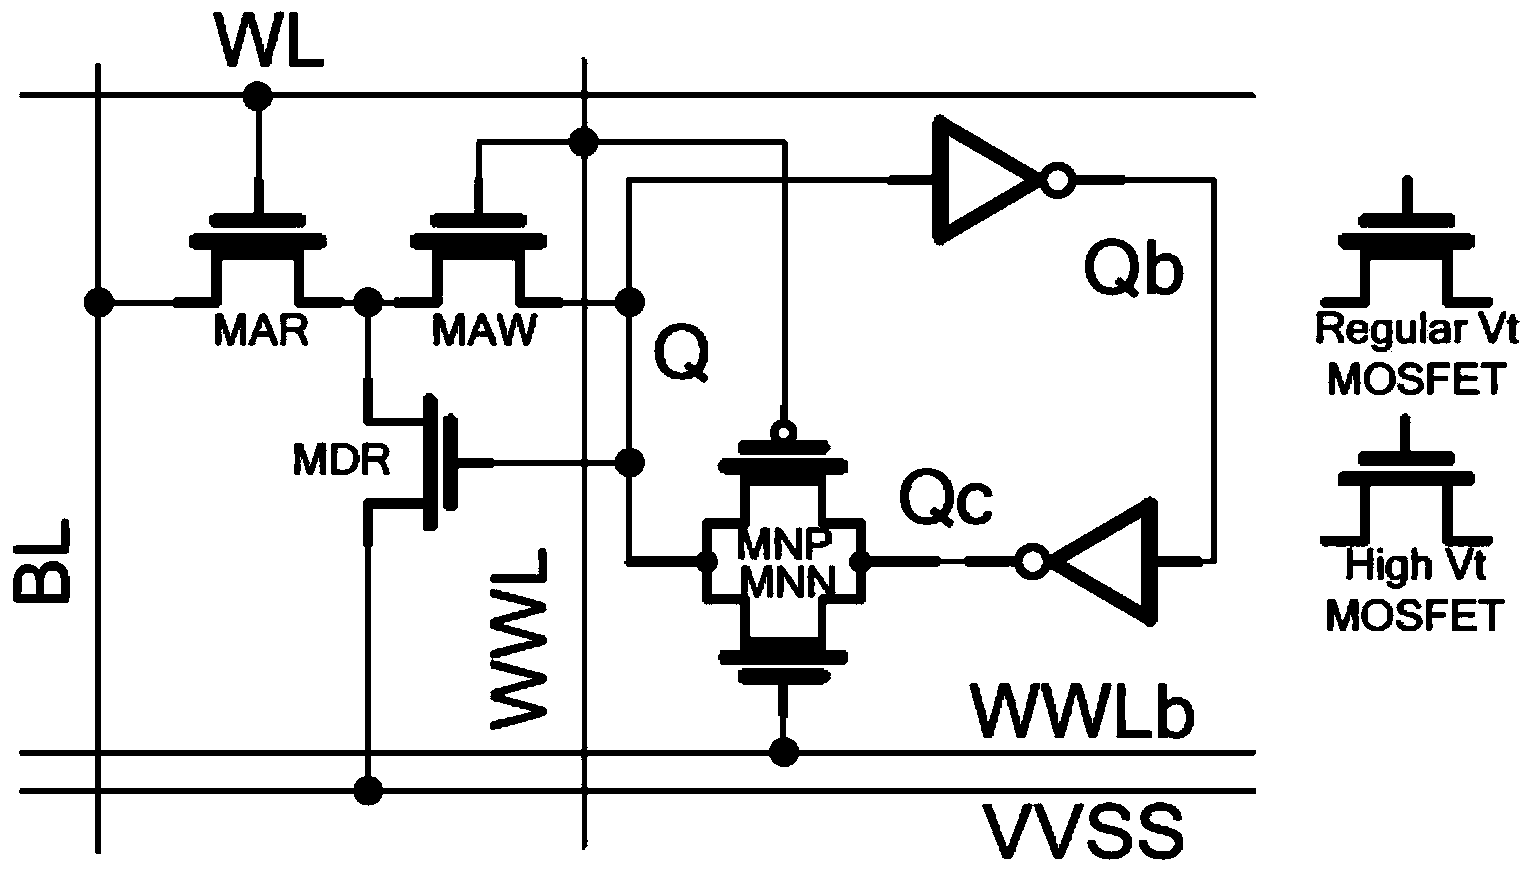 Novel 12-tube SRAM (Static Random Access memory) unit circuit capable of simultaneously increasing read noise tolerance and writing margin